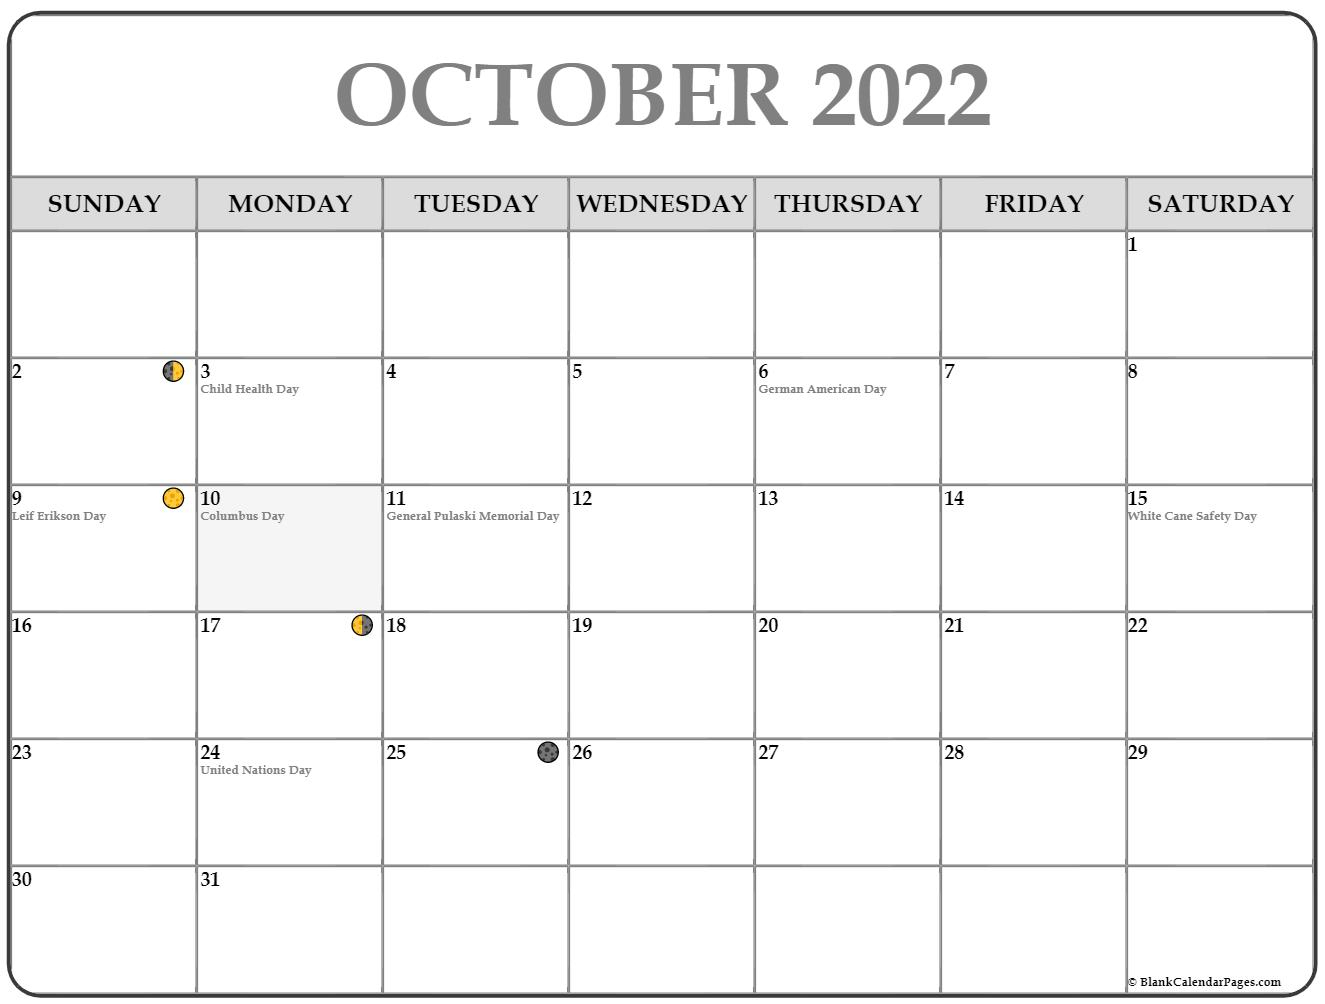 Pick Lunar Calendar June 2022